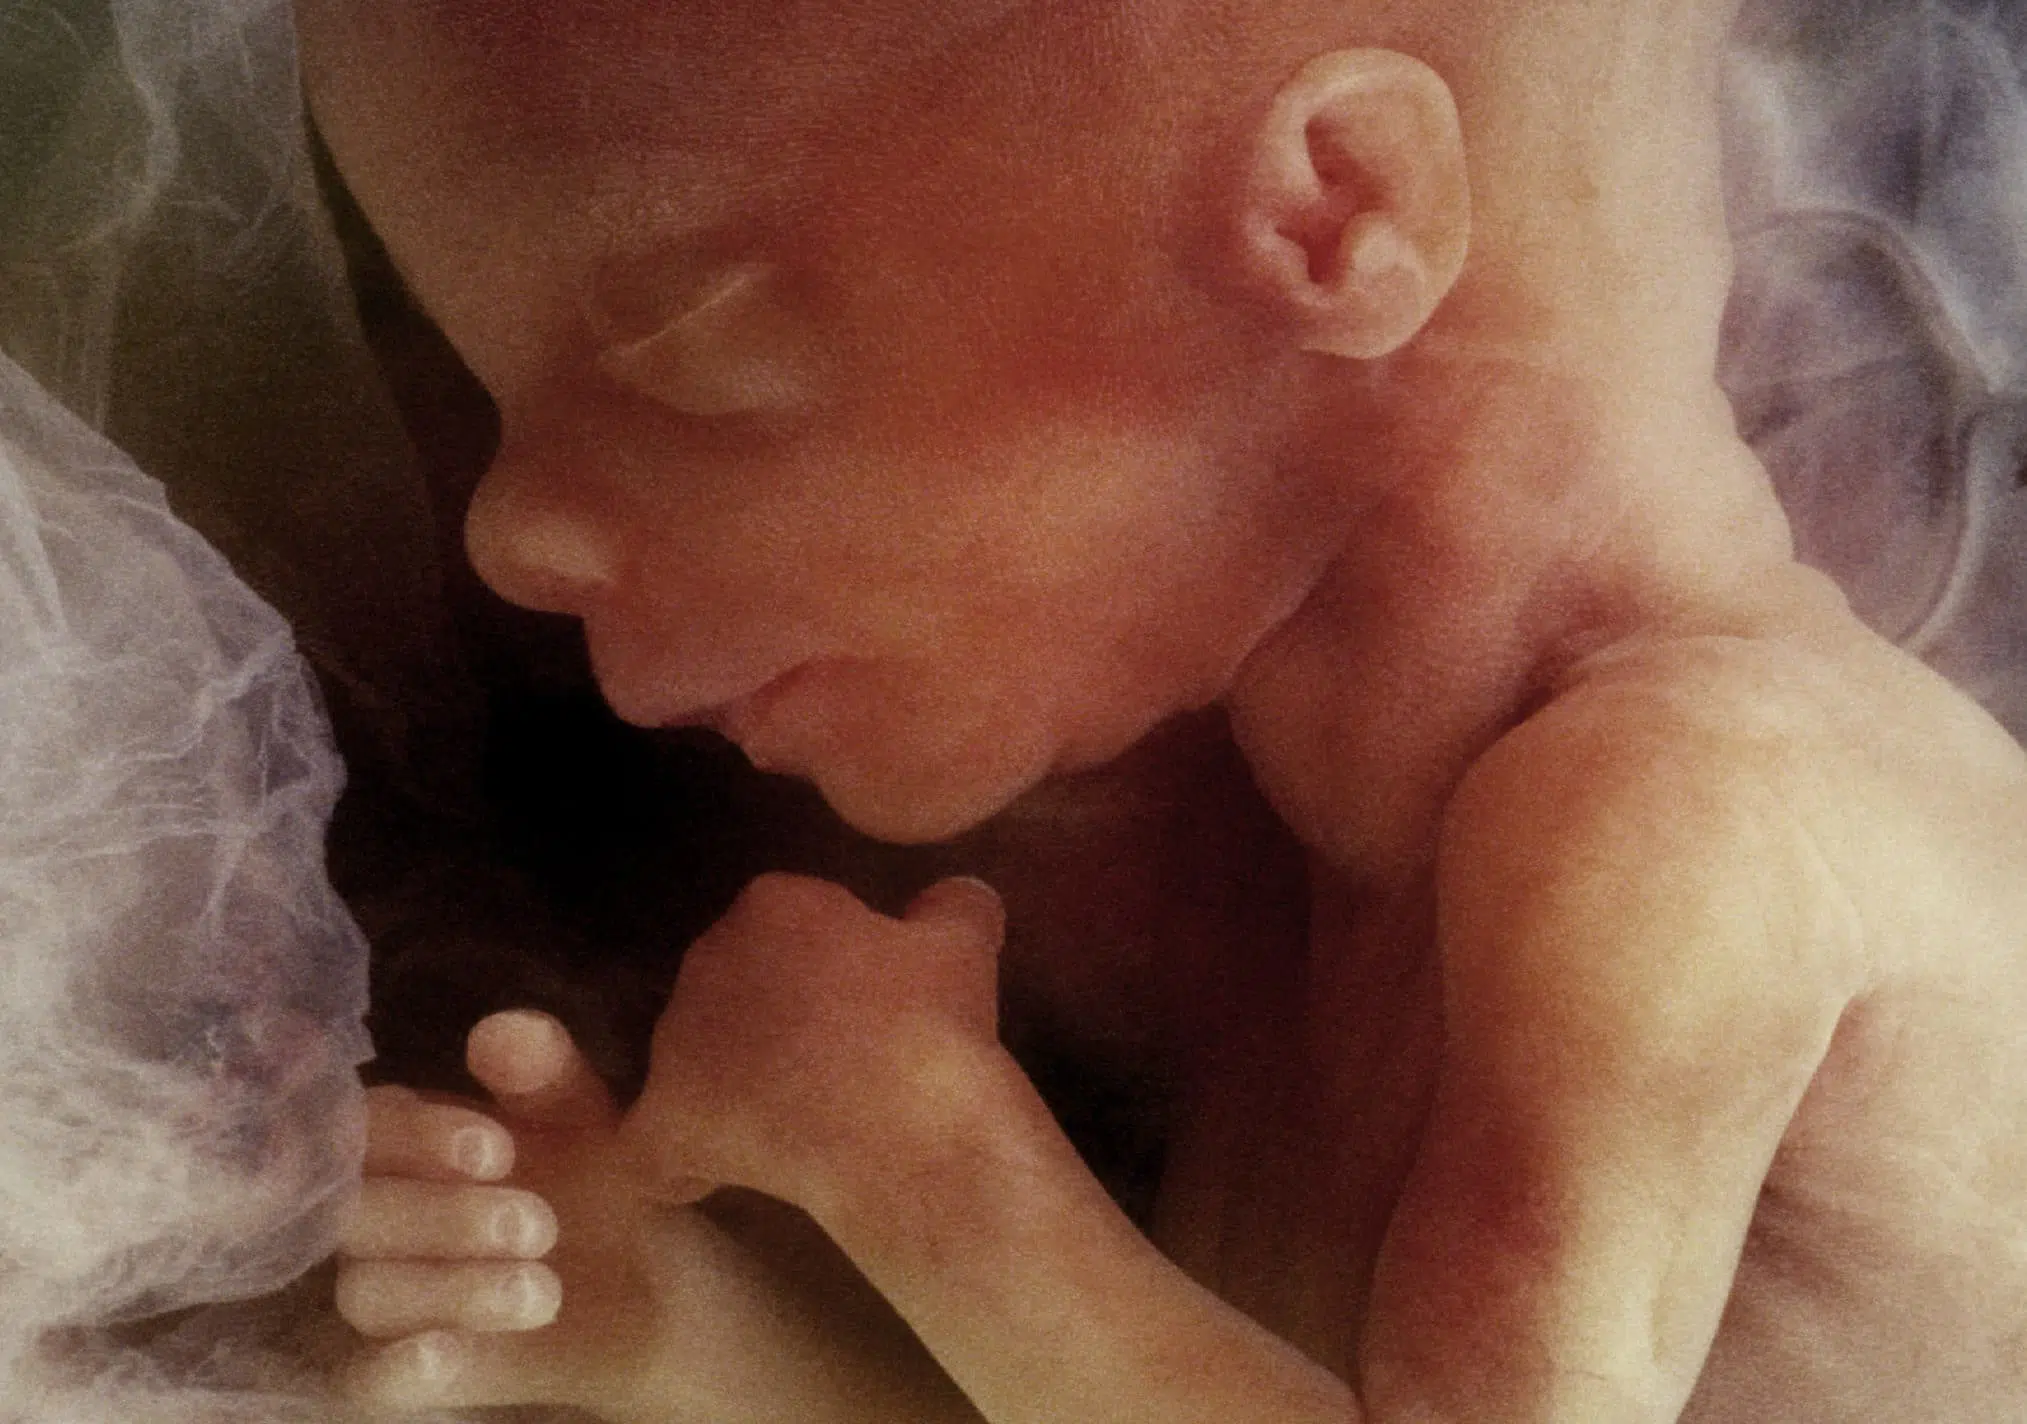 fetus at 12 weeks, unborn child